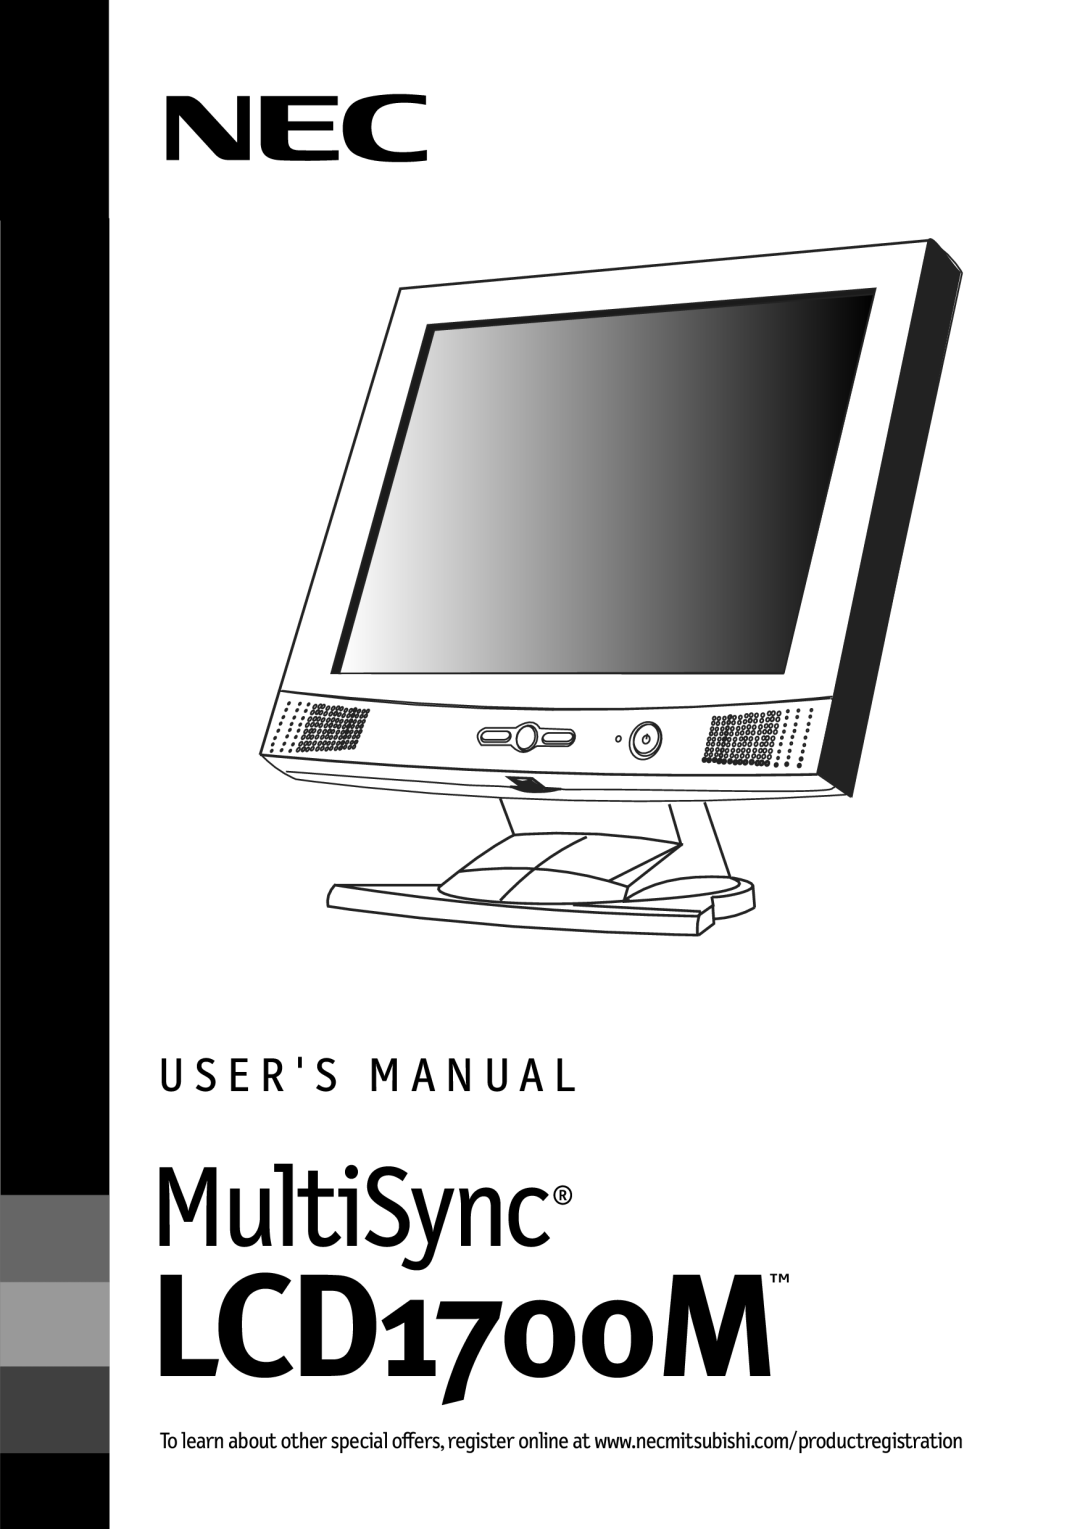 NEC LCD1700M user manual MultiSync, U S E R S M A N U A L 